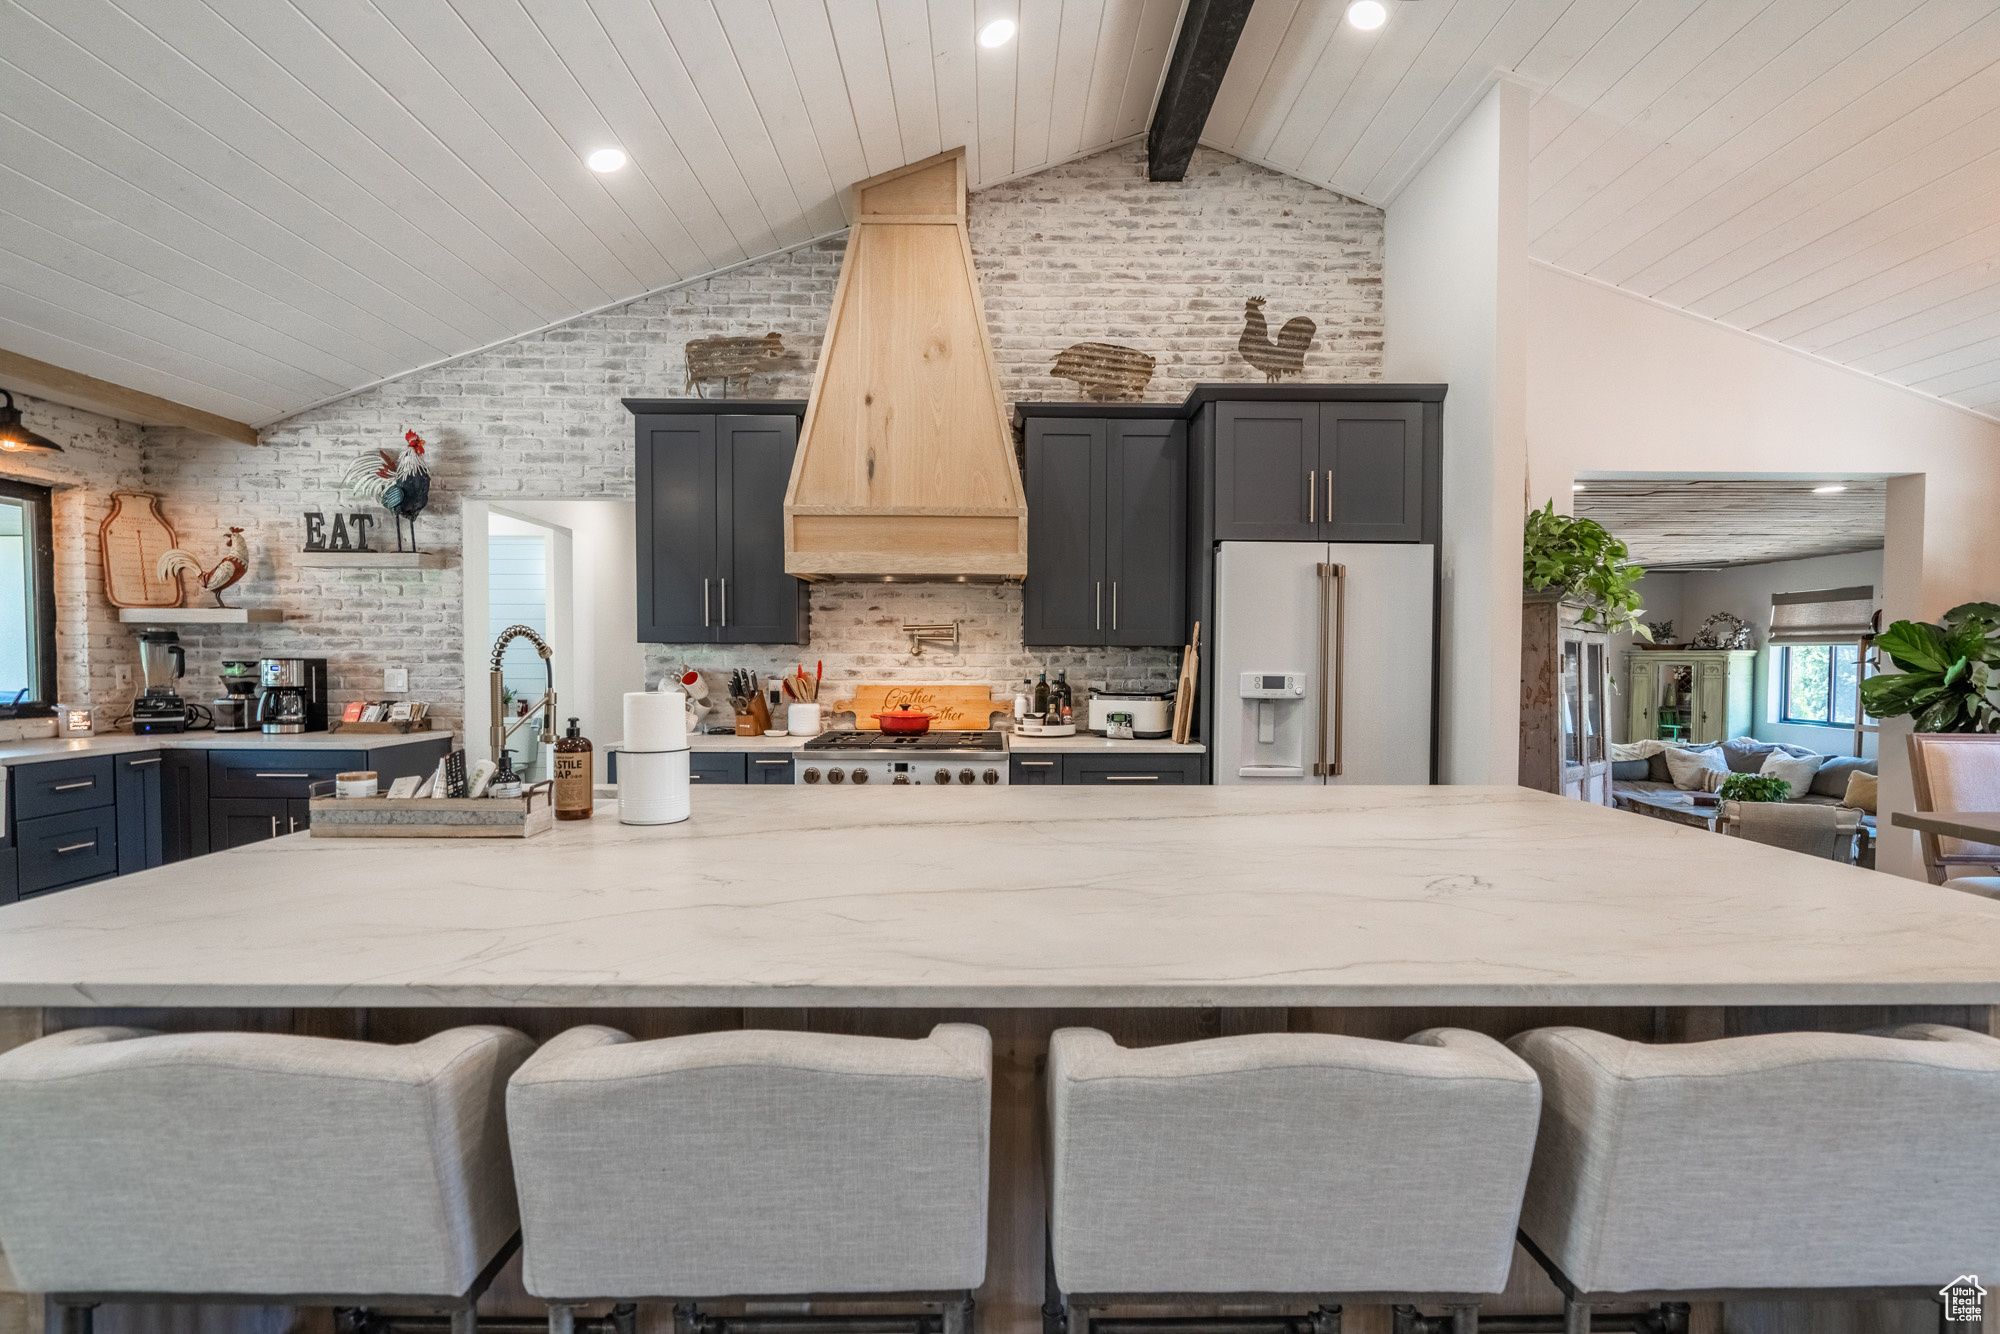 Interior space with a breakfast bar area, high end white fridge, custom range hood, backsplash, and a kitchen island